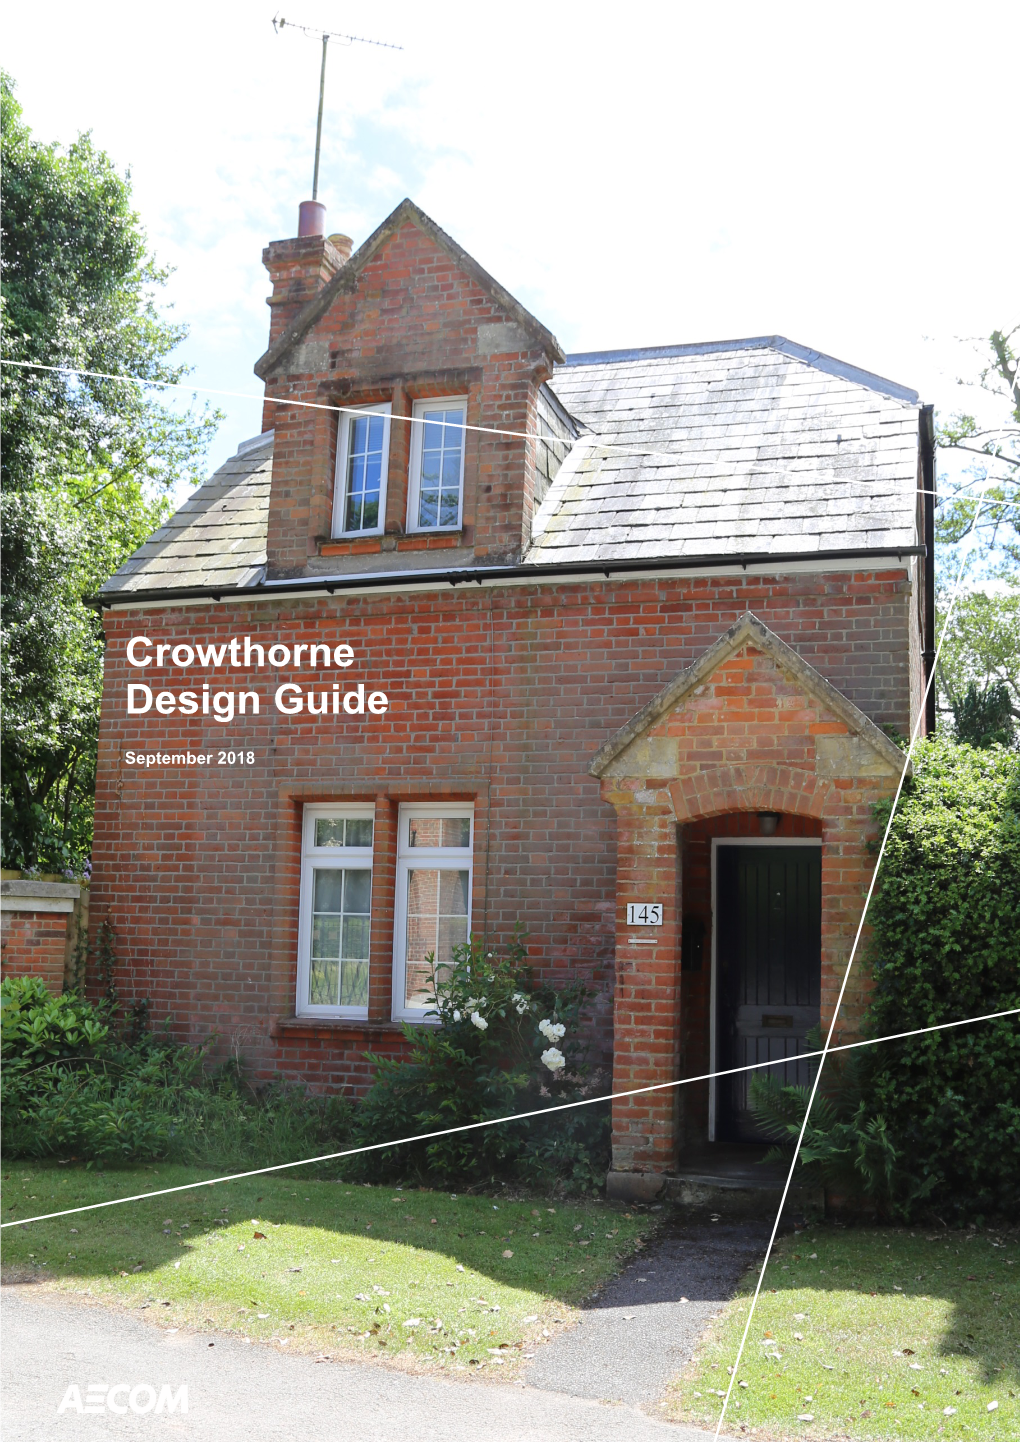 Crowthorne Design Guide